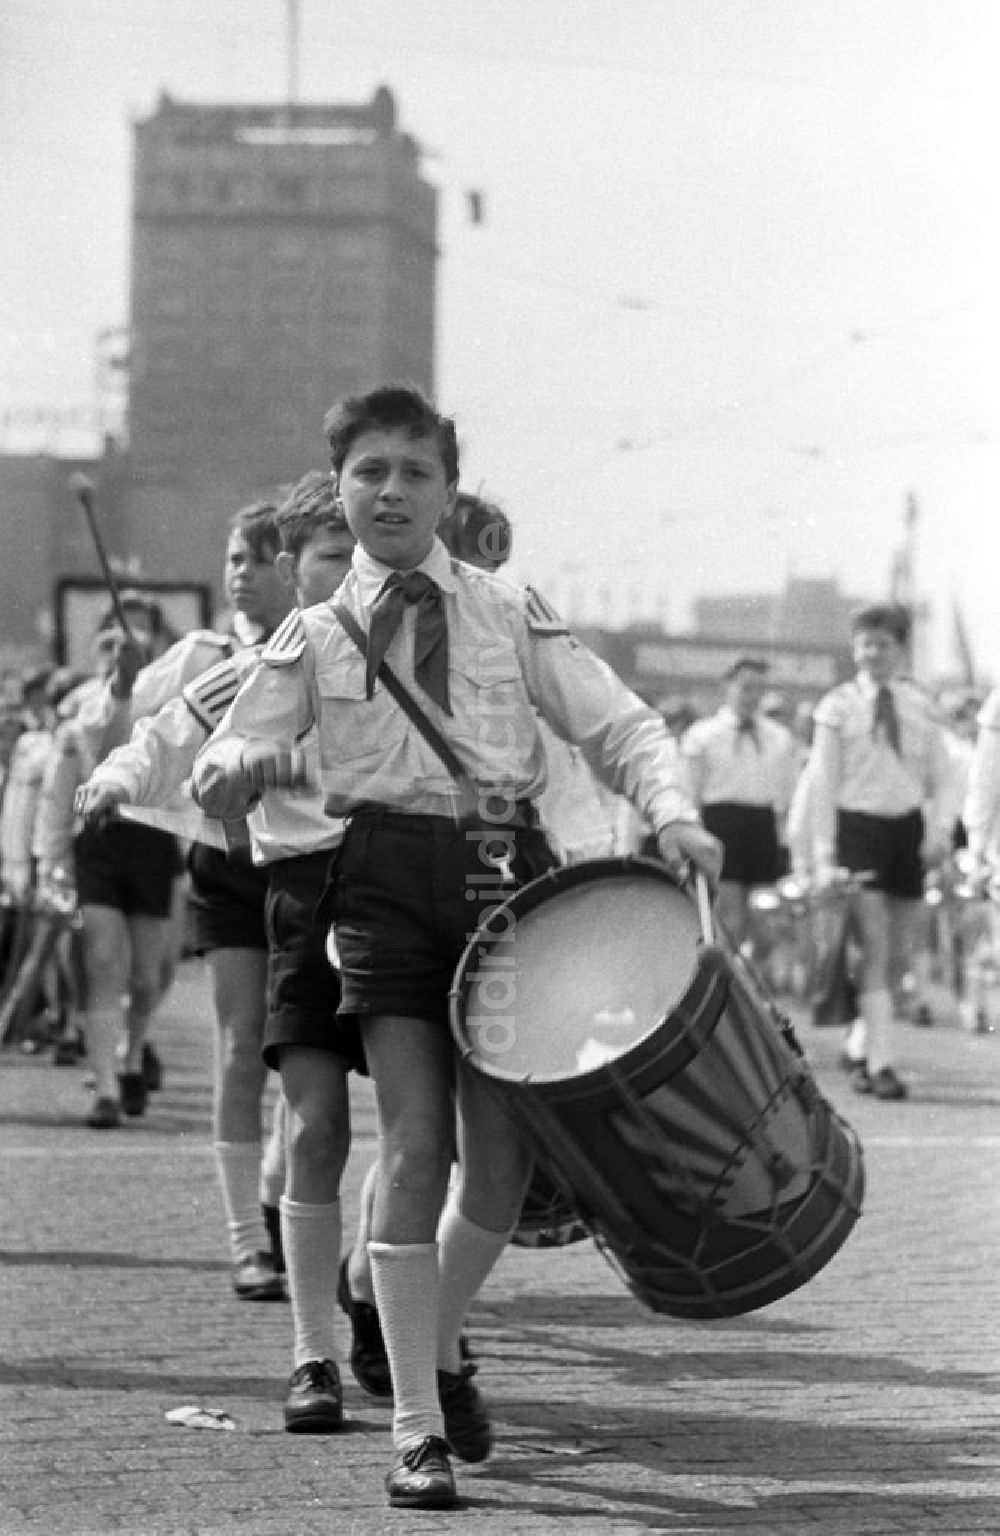 DDR-Bildarchiv: Leipzig - Leipzig - 1. Mai-Demonstration 1958